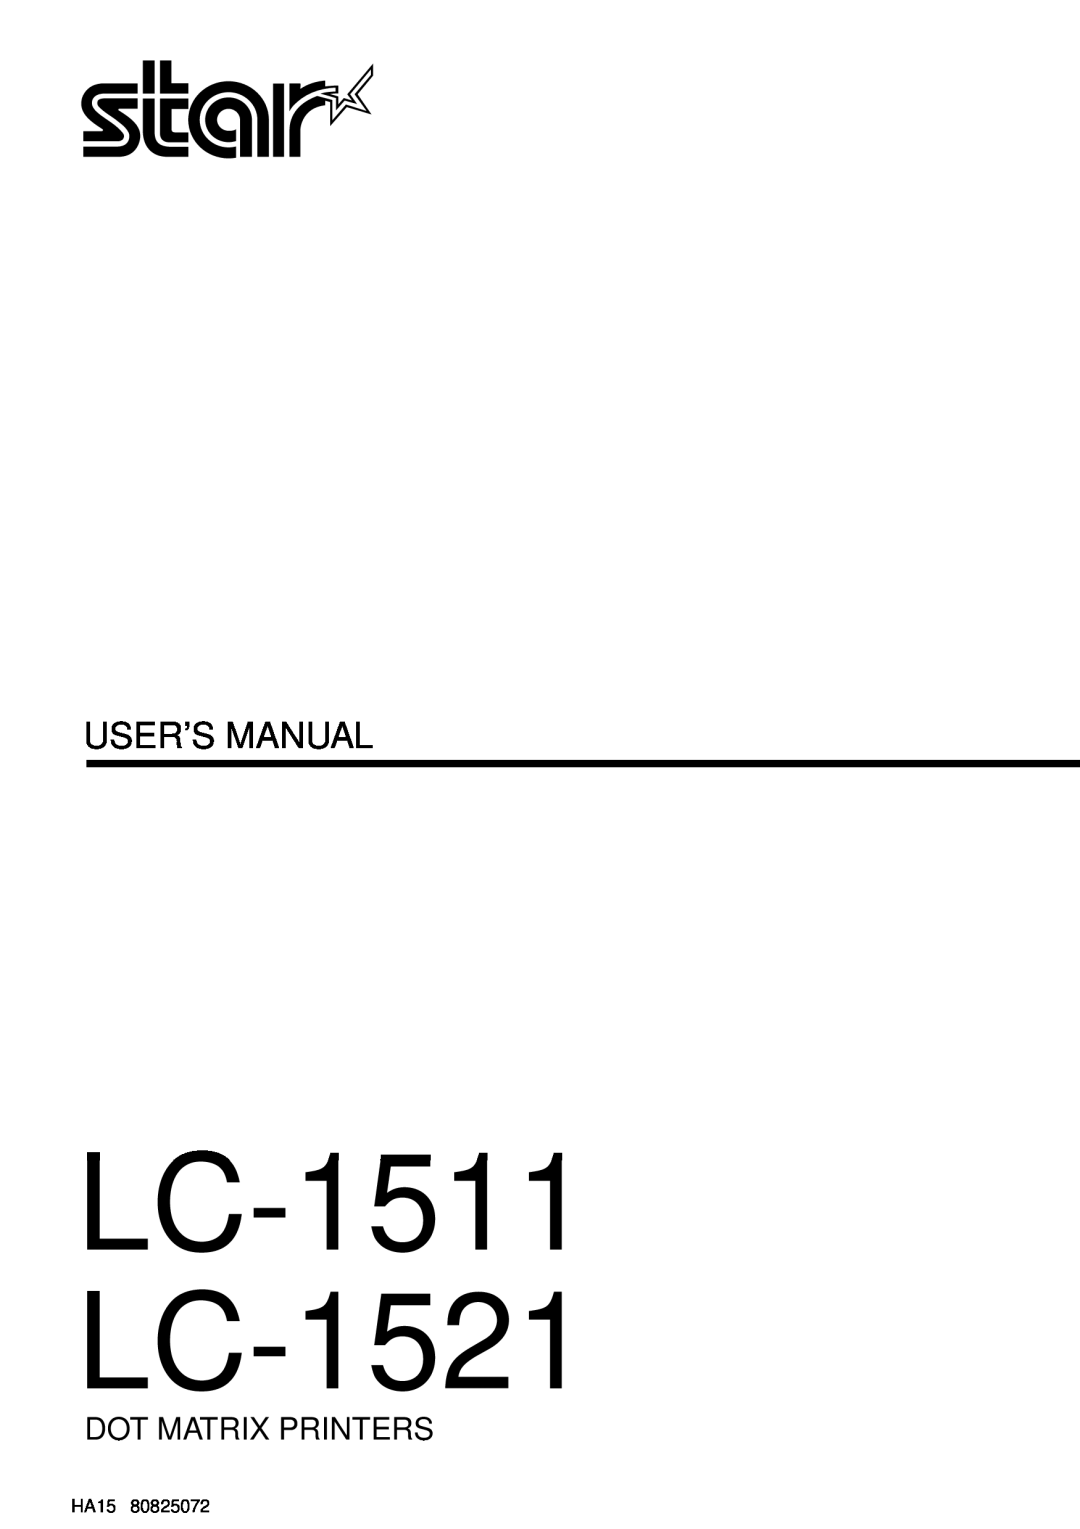 Star Micronics DOT MATRIX PRINTERS, HA15 80825072 user manual LC-1511 LC-1521, User’S Manual, Dot Matrix Printers 